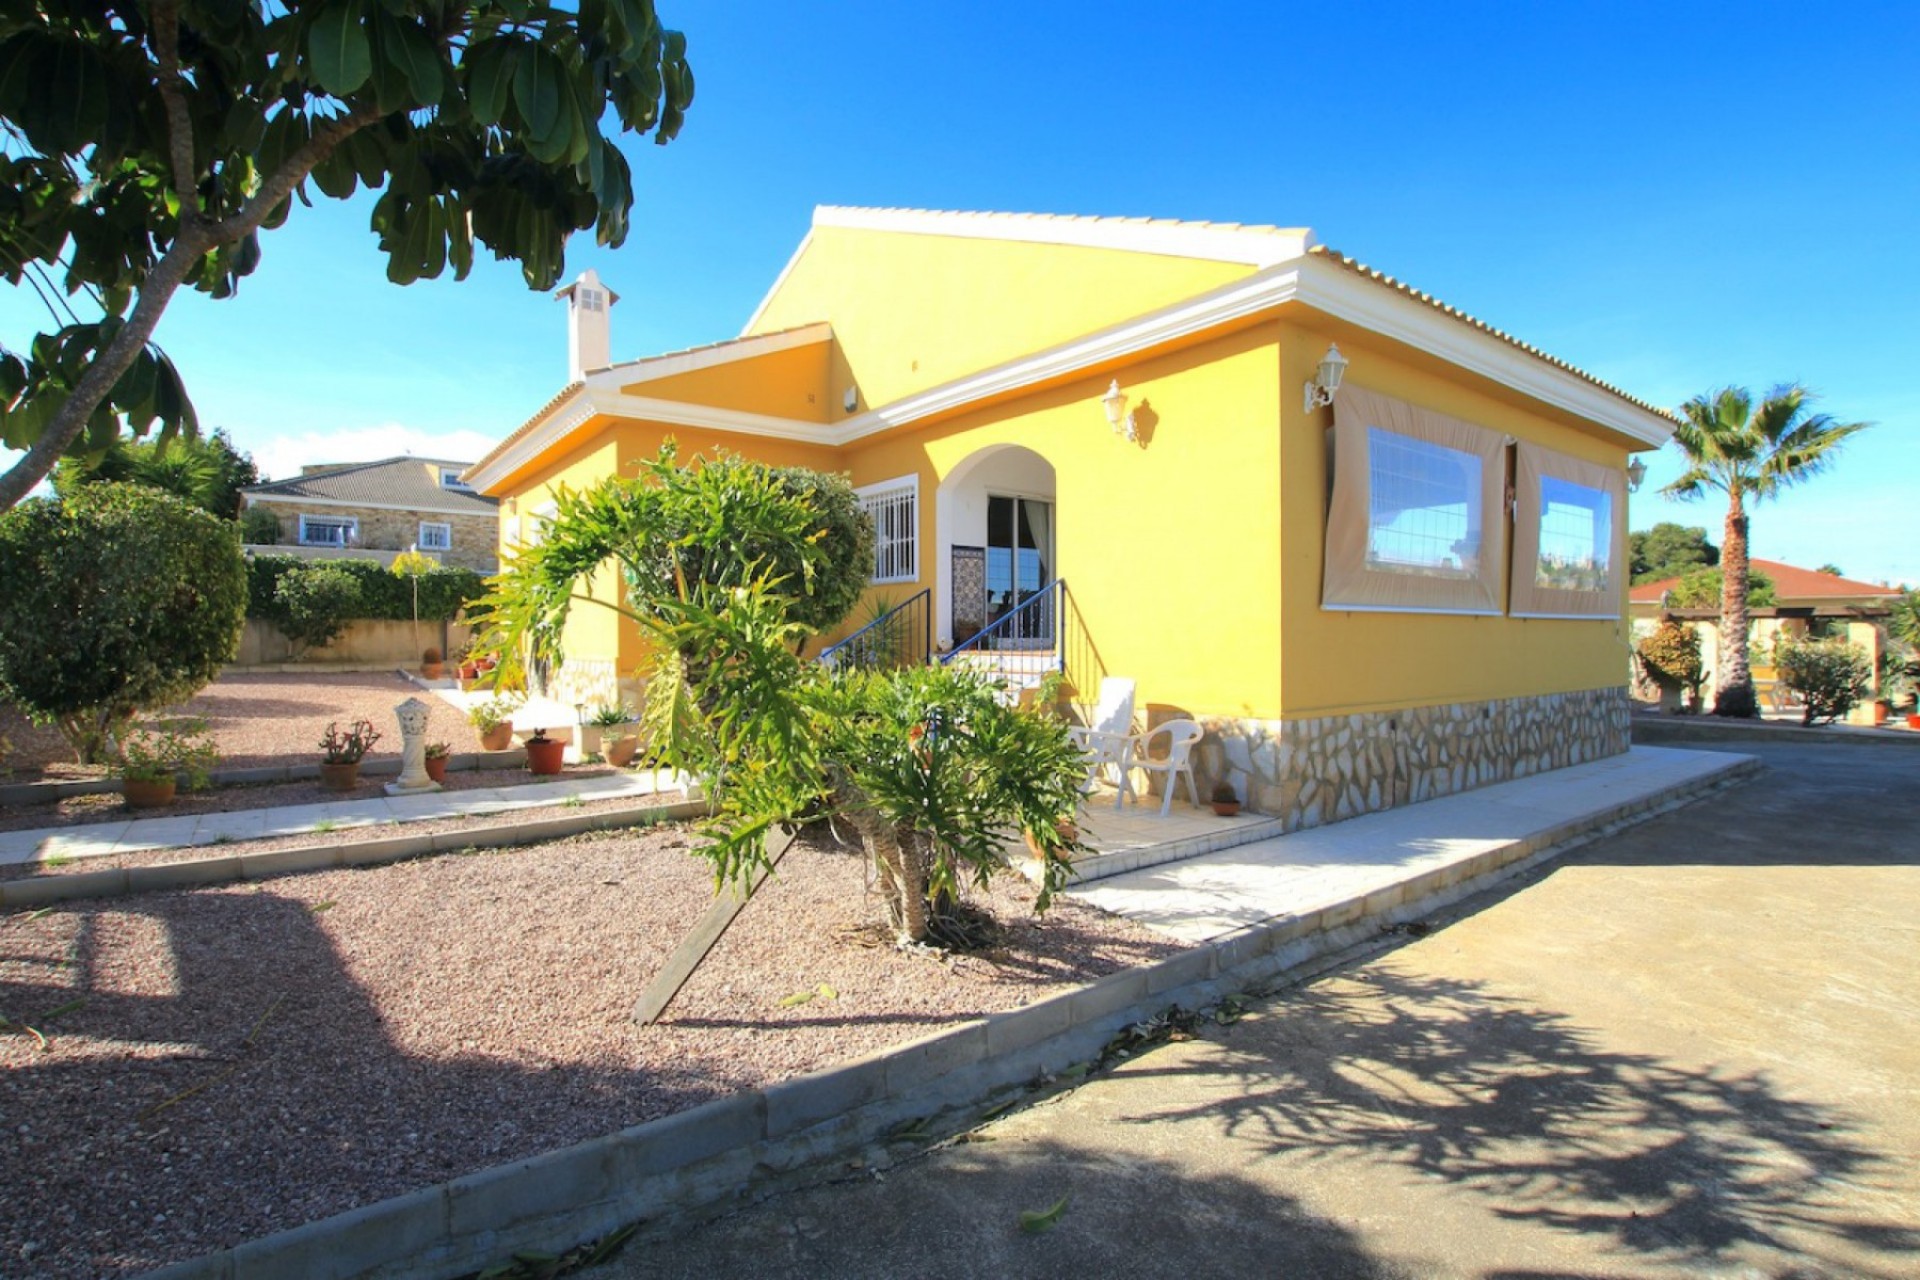 4 bedroom house / villa for sale in Jacarilla, Costa Blanca